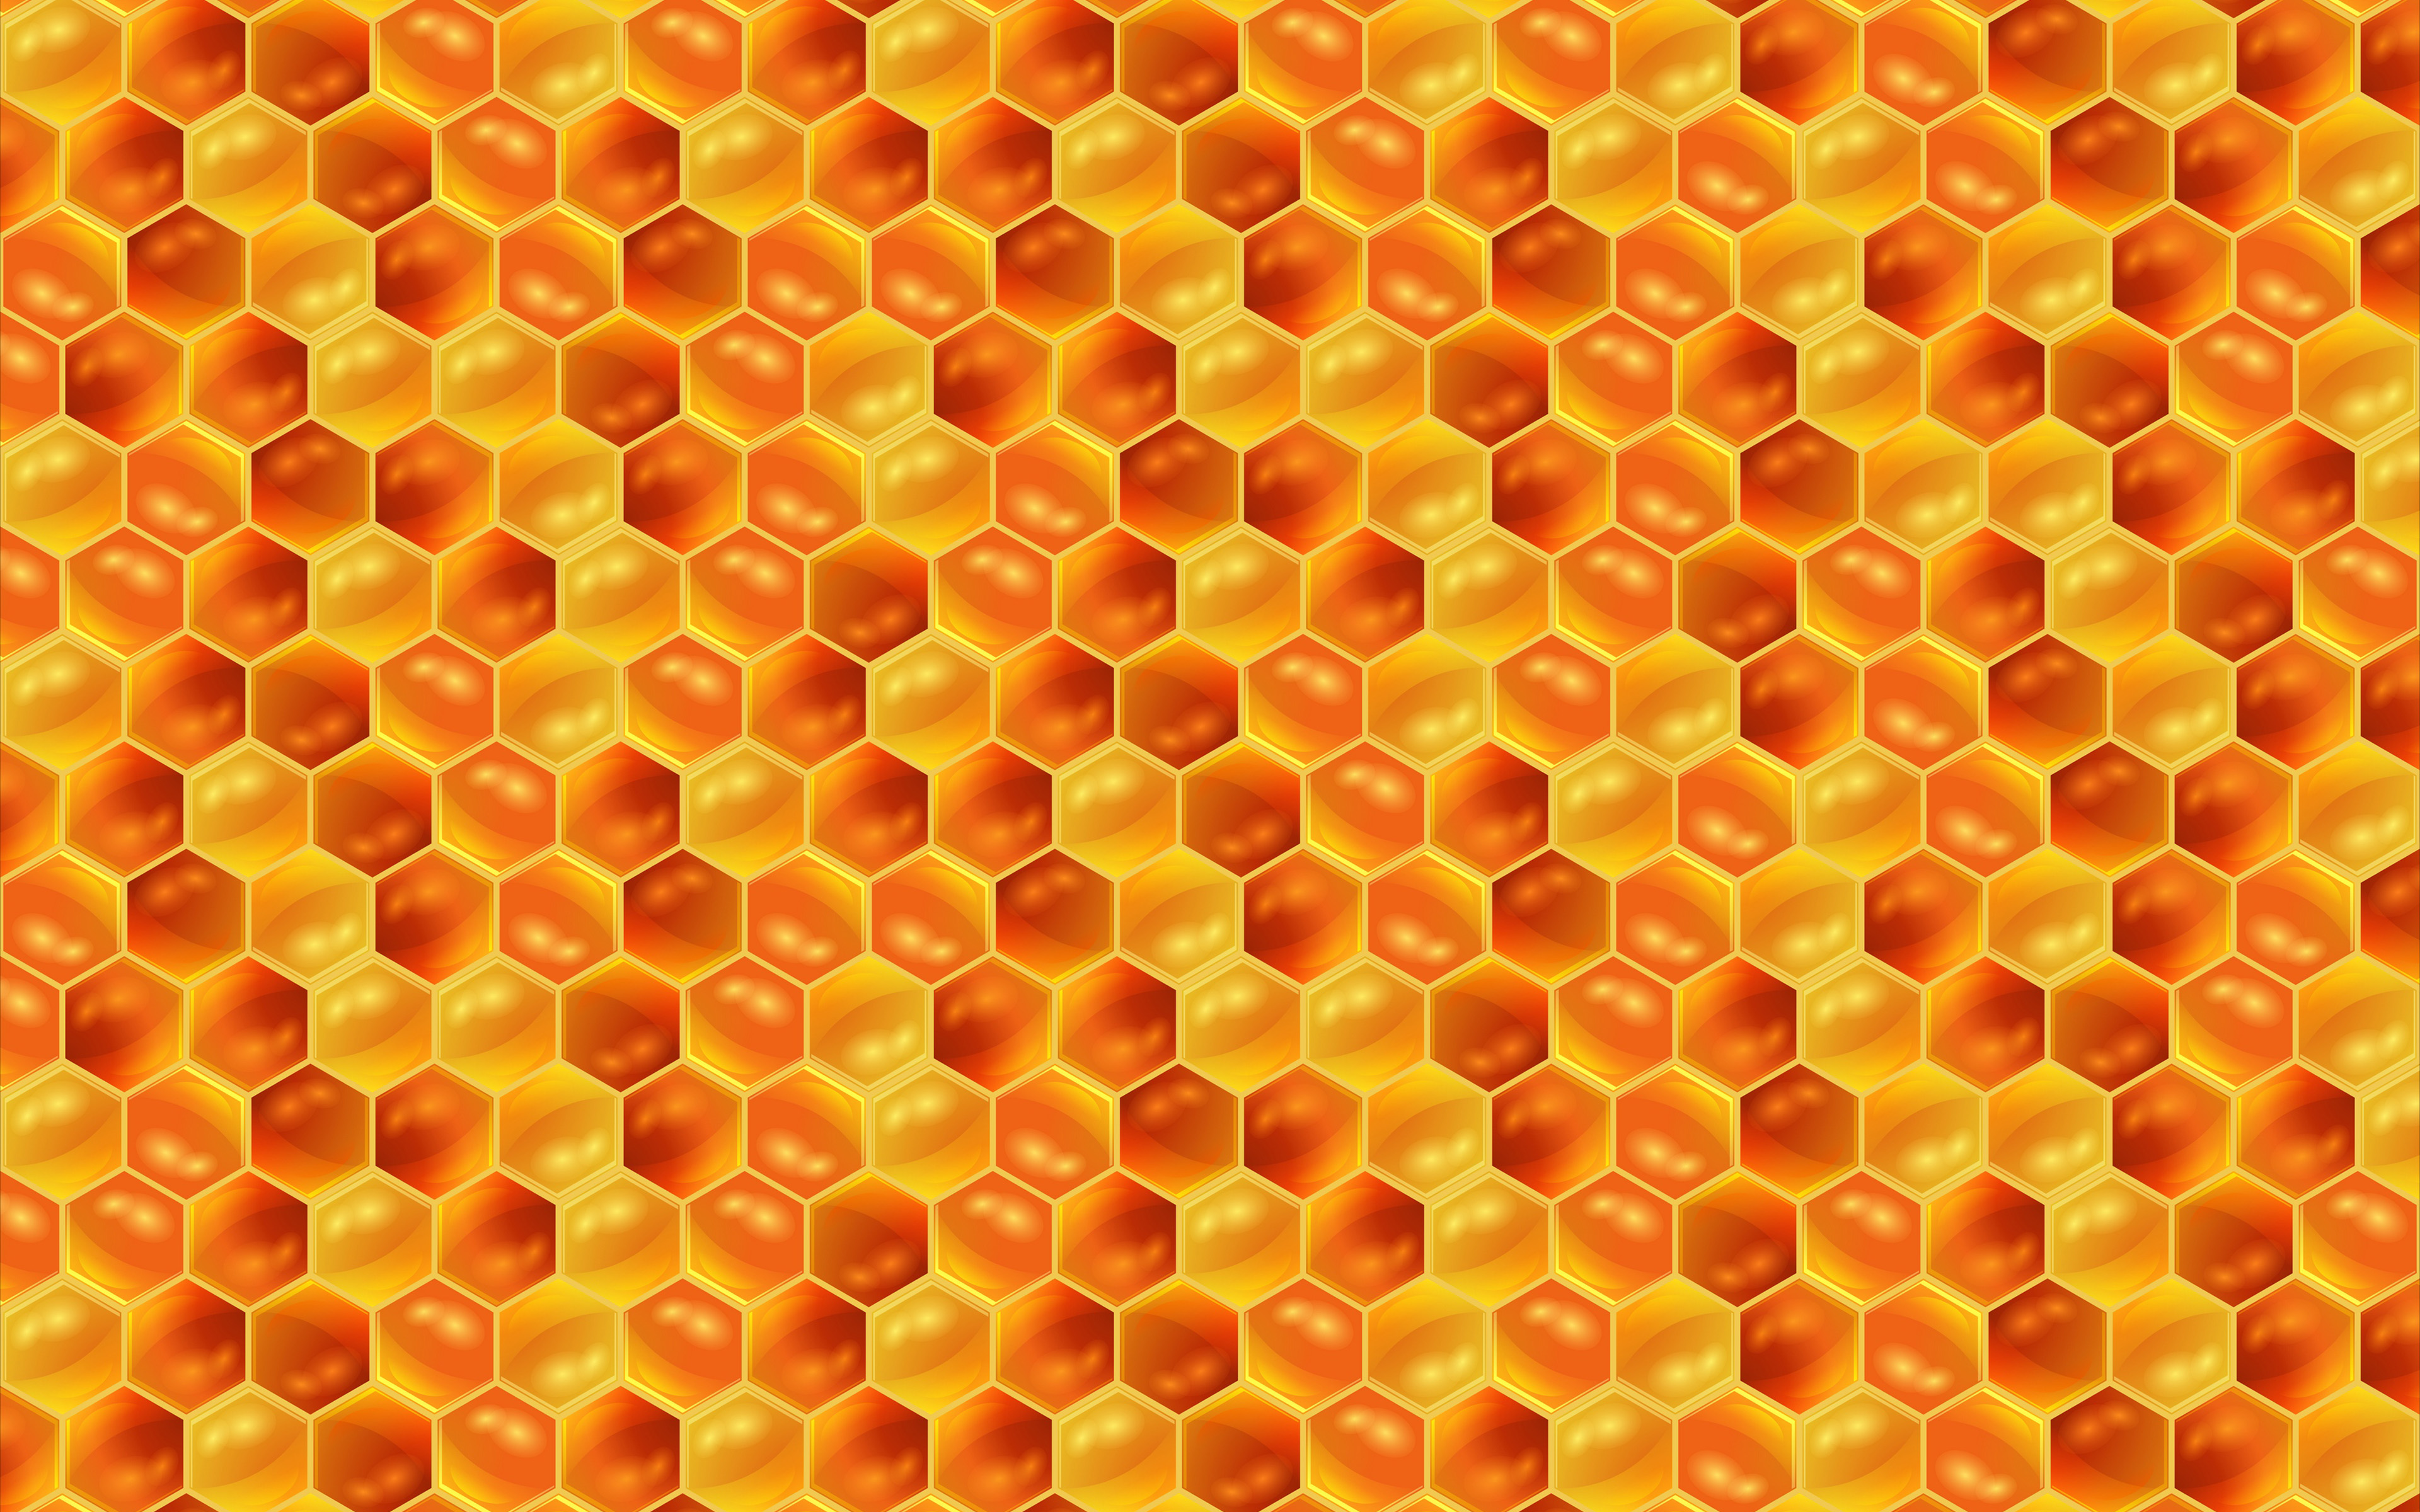 Honeycomb Texture Photoshop